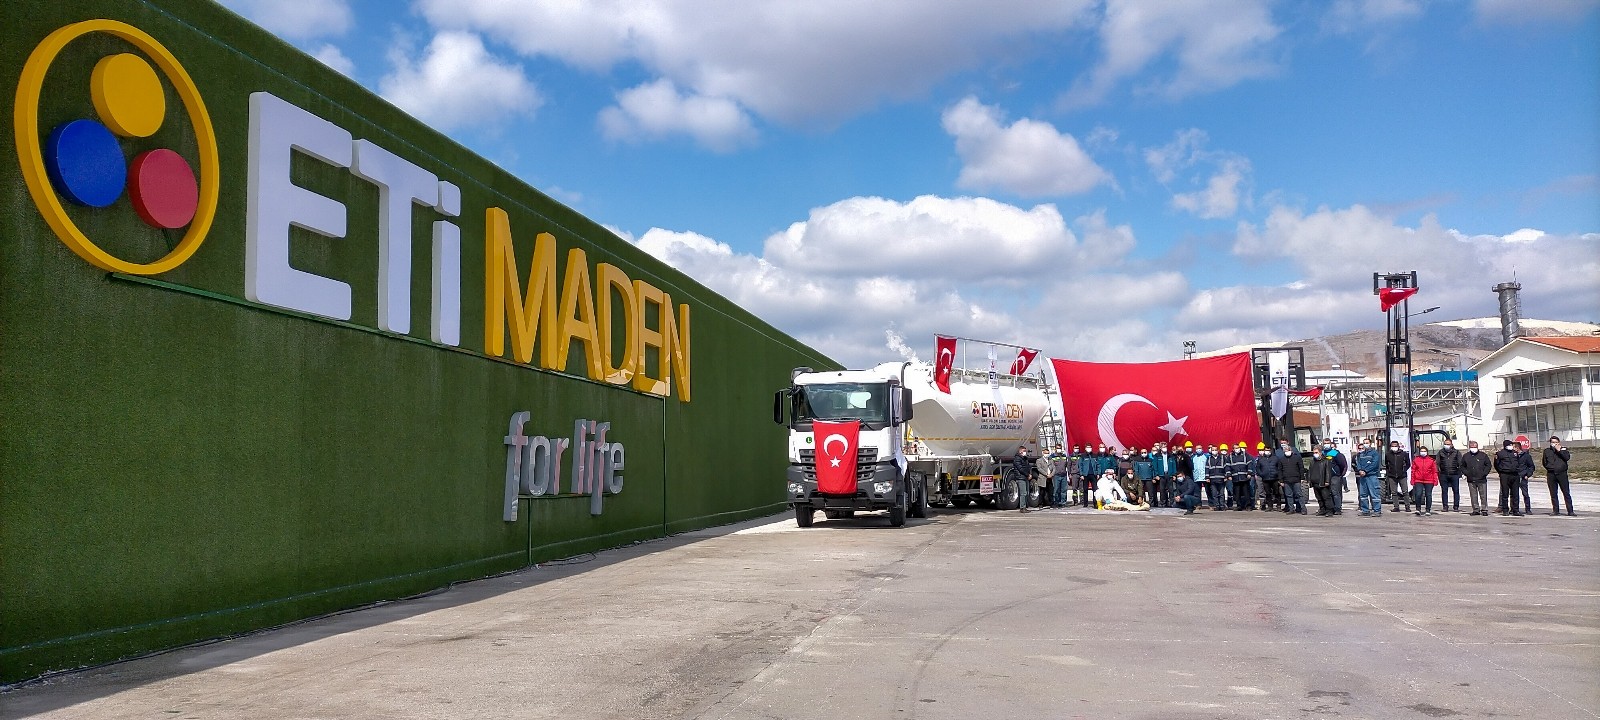 Eti Maden - Turkish Chemical State Company 